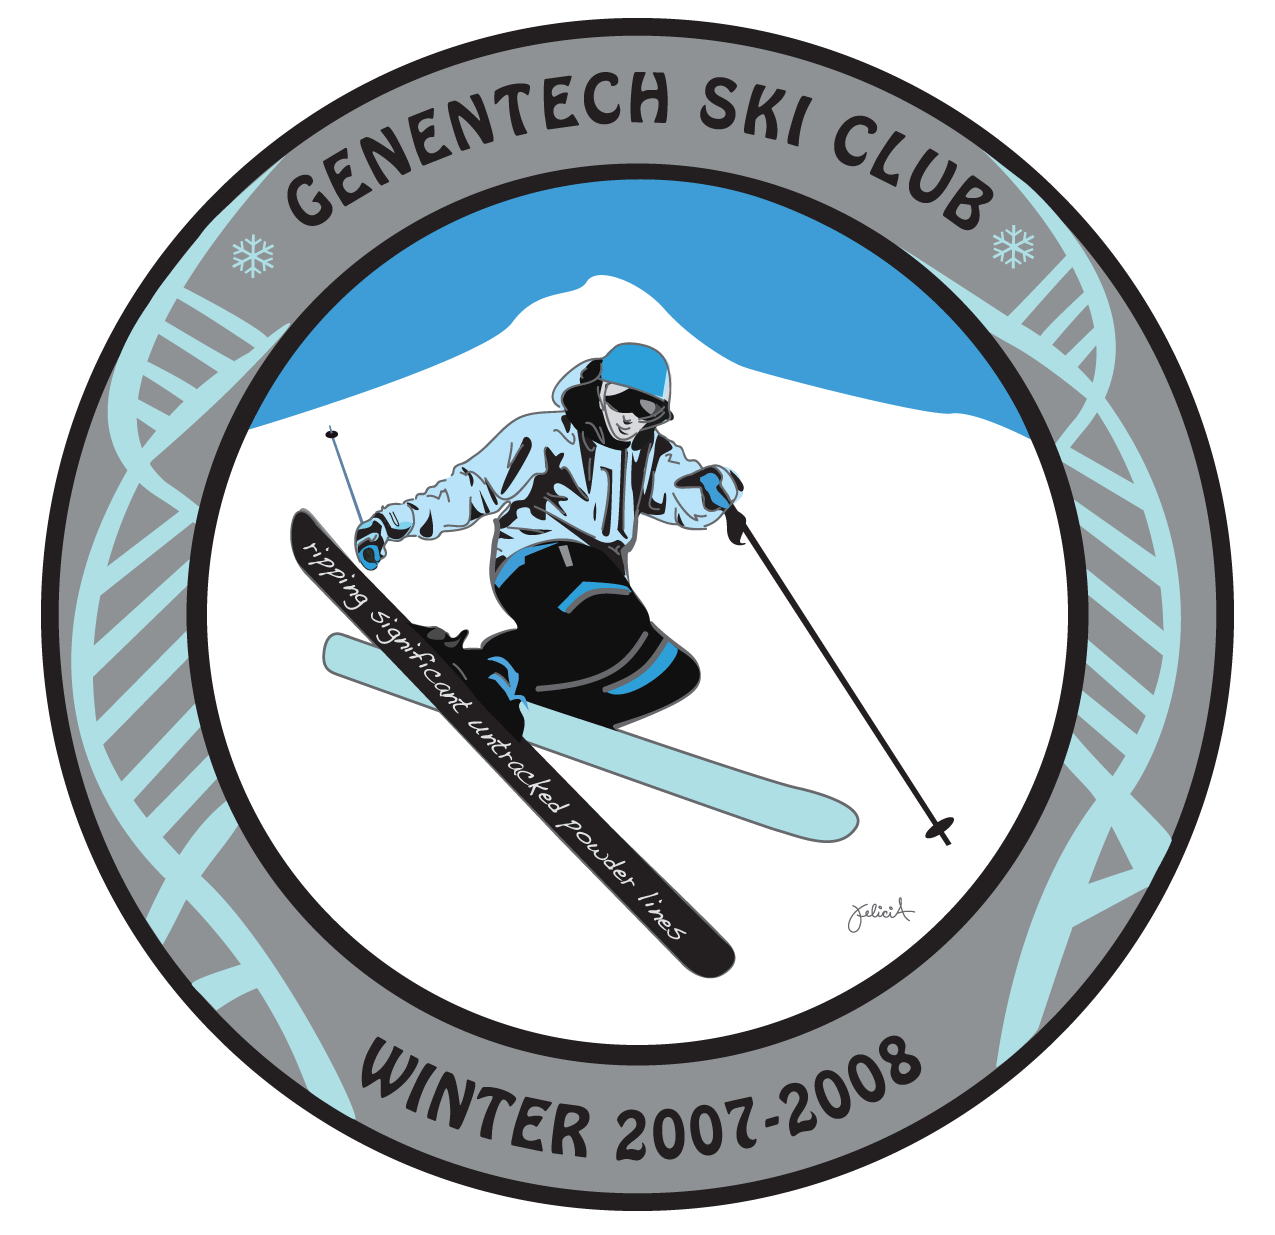 Genentech's ski logo